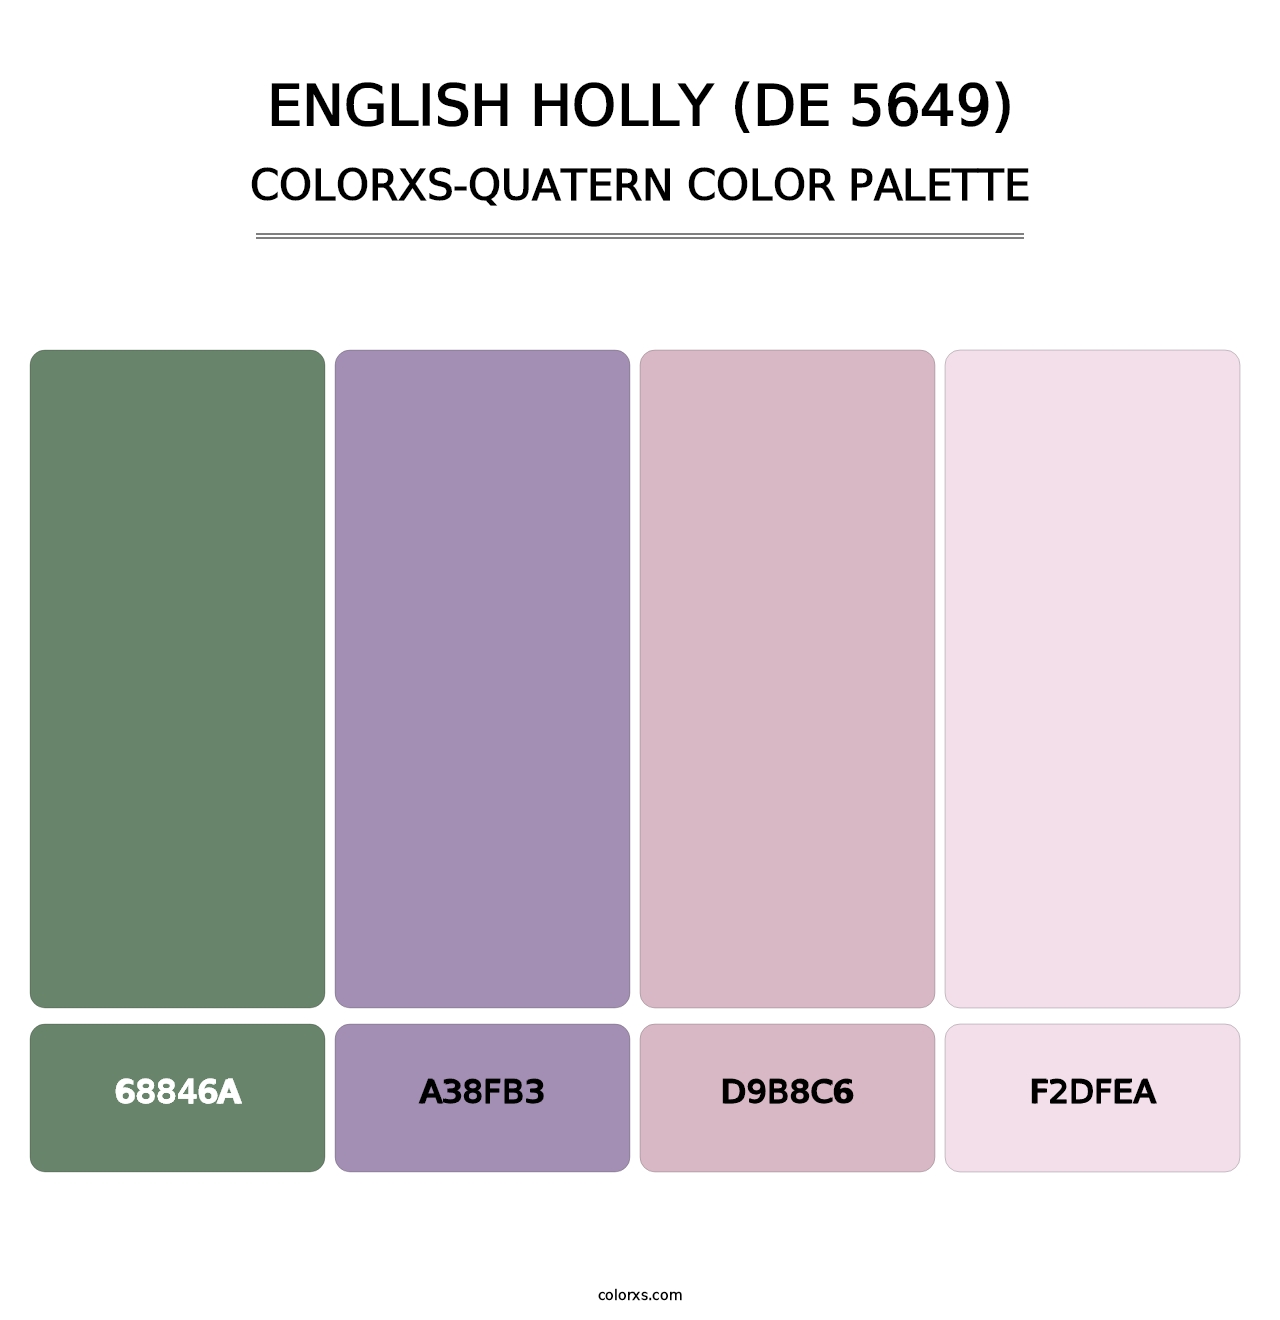 English Holly (DE 5649) - Colorxs Quatern Palette